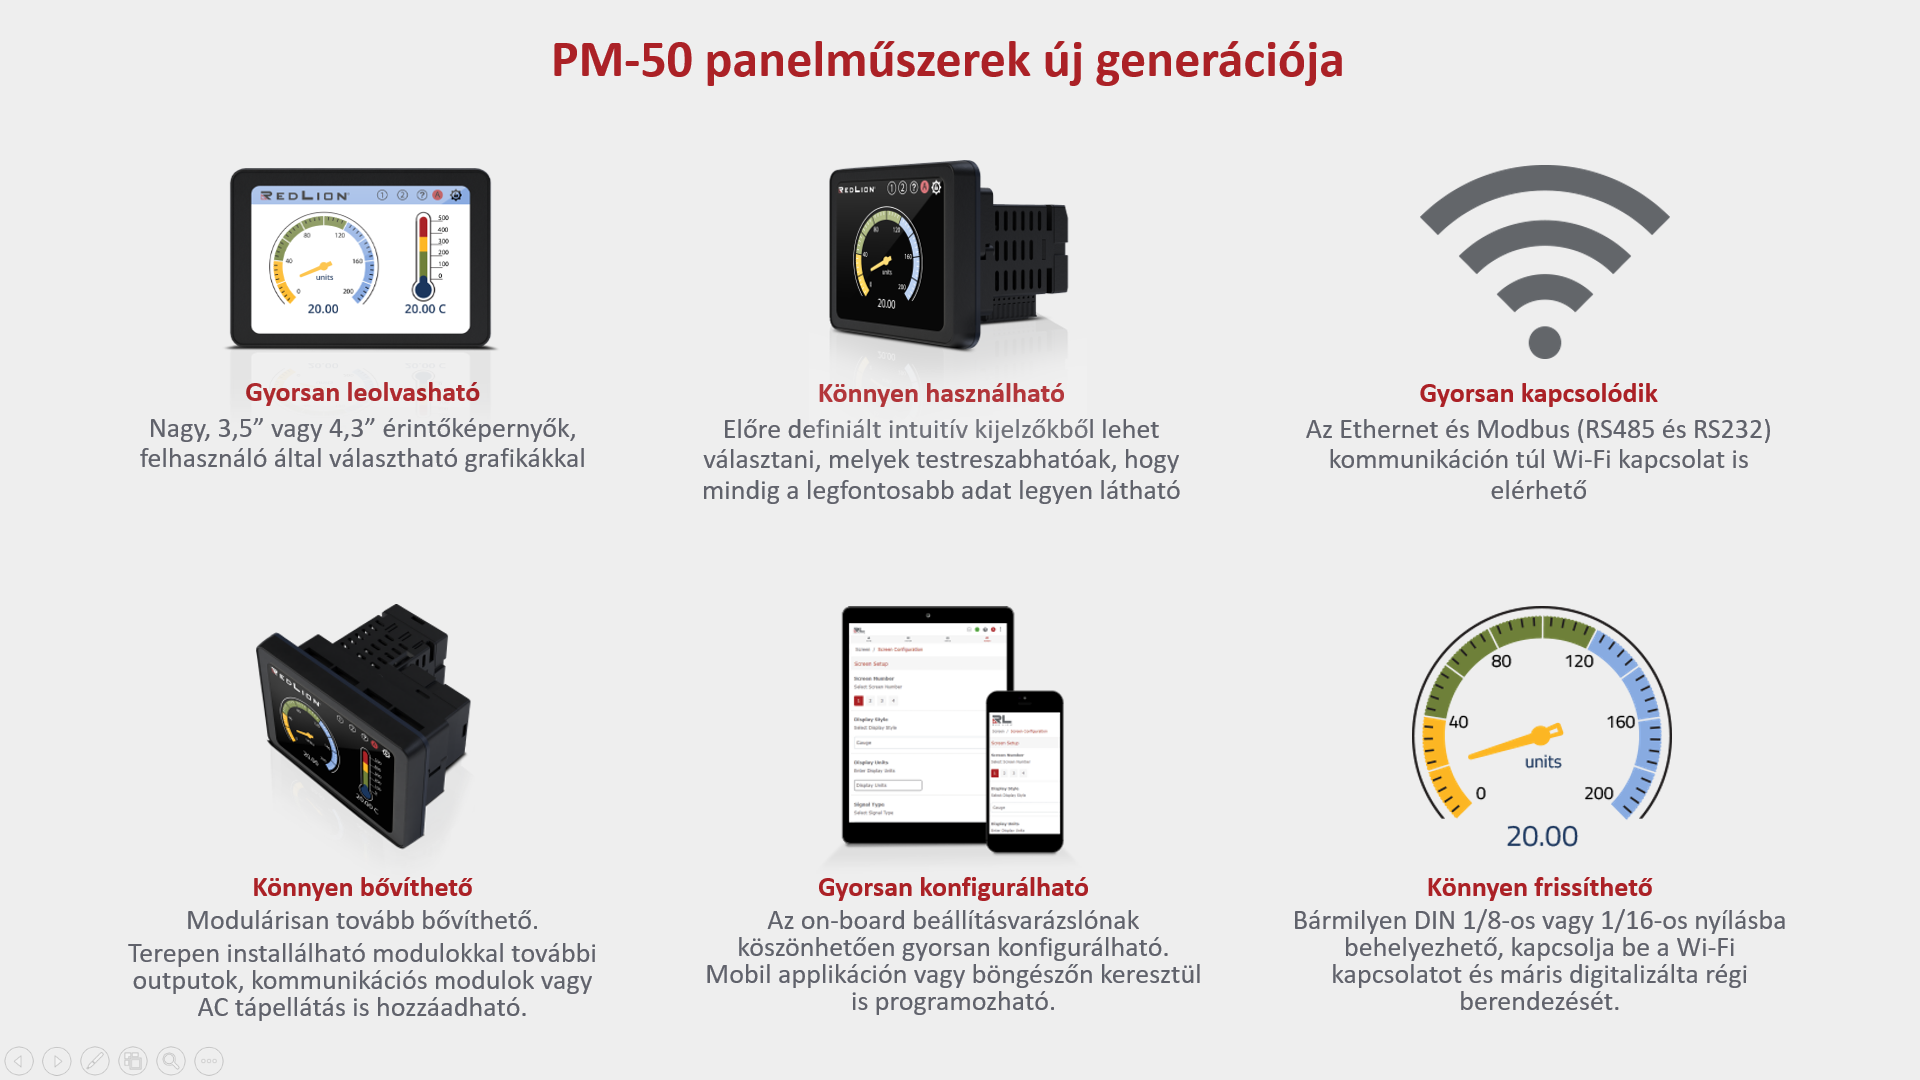 Red Lion PM50 a panelműszerek új generációja.